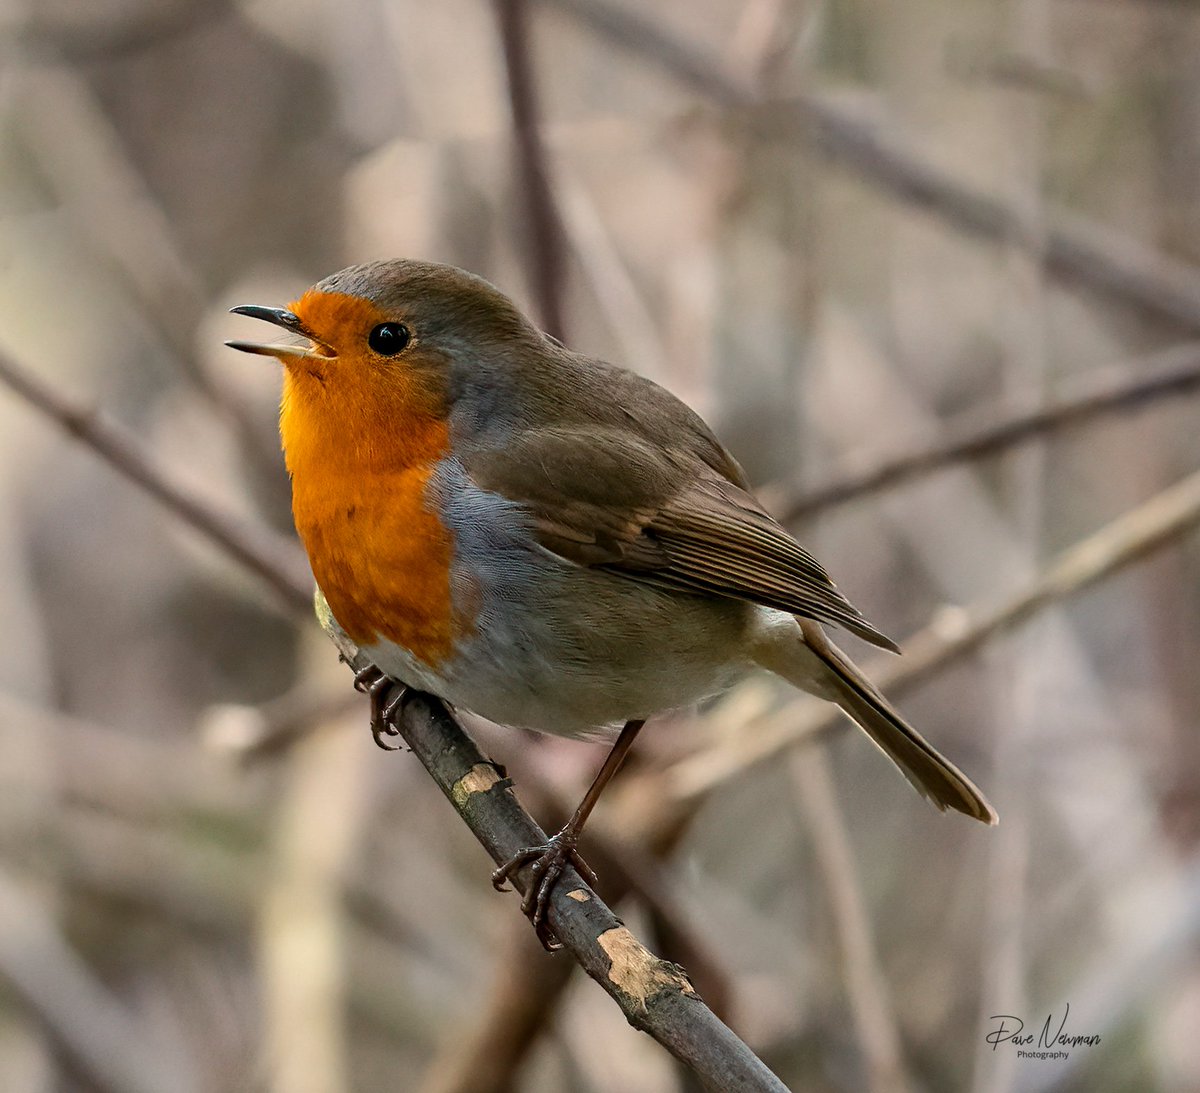 #singing #songs the #robin #TwitterNatureCommunity #TwitterFriends #bird #birds #sleaford #lincolnshire #dullday #SonyAlpha #riverwalks #birdphotography #followme if you love #wildlife without #politics